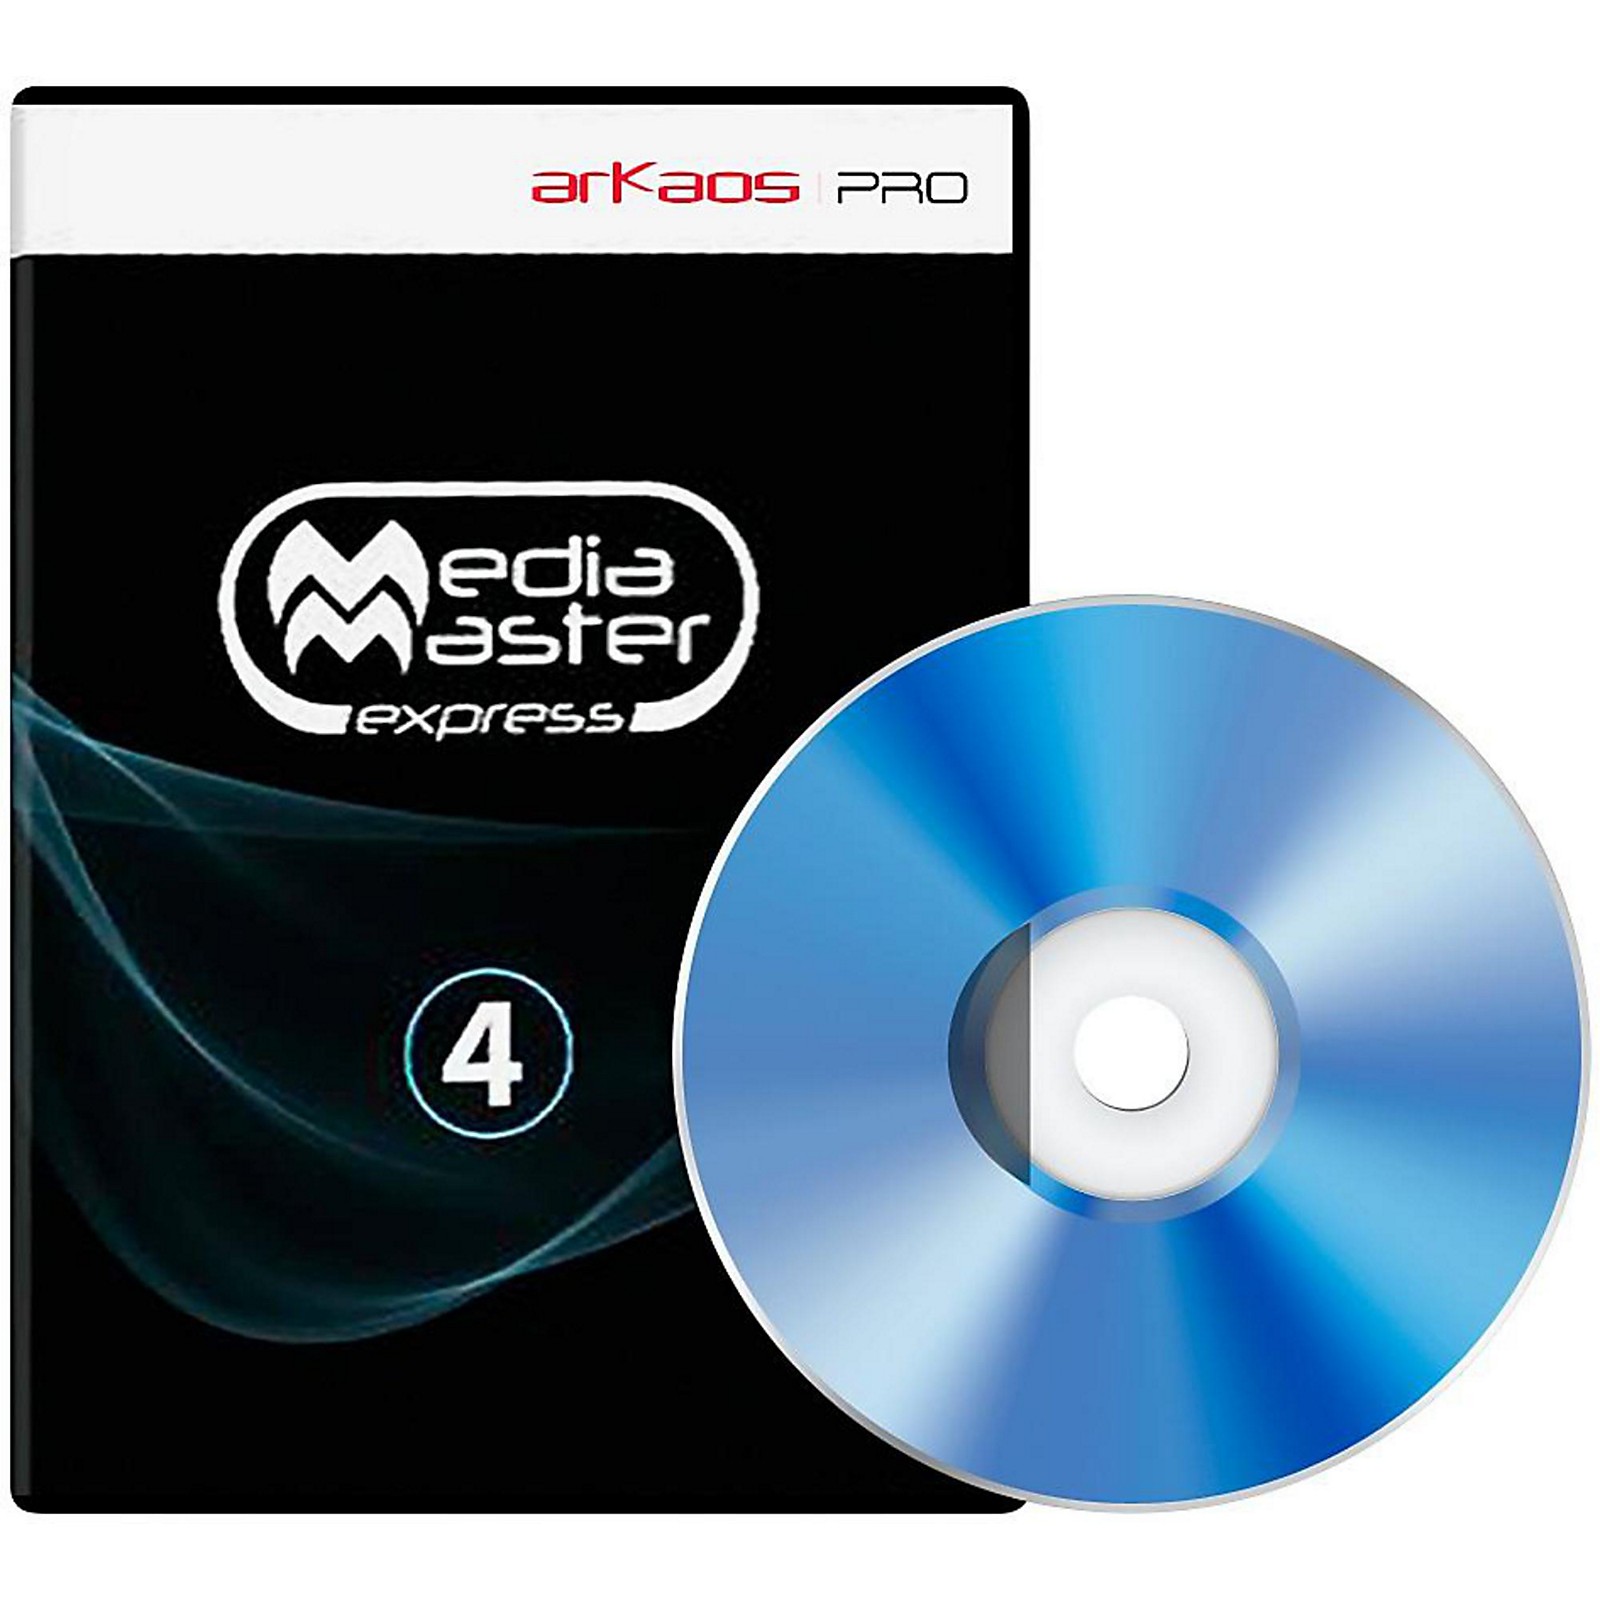 media express software download